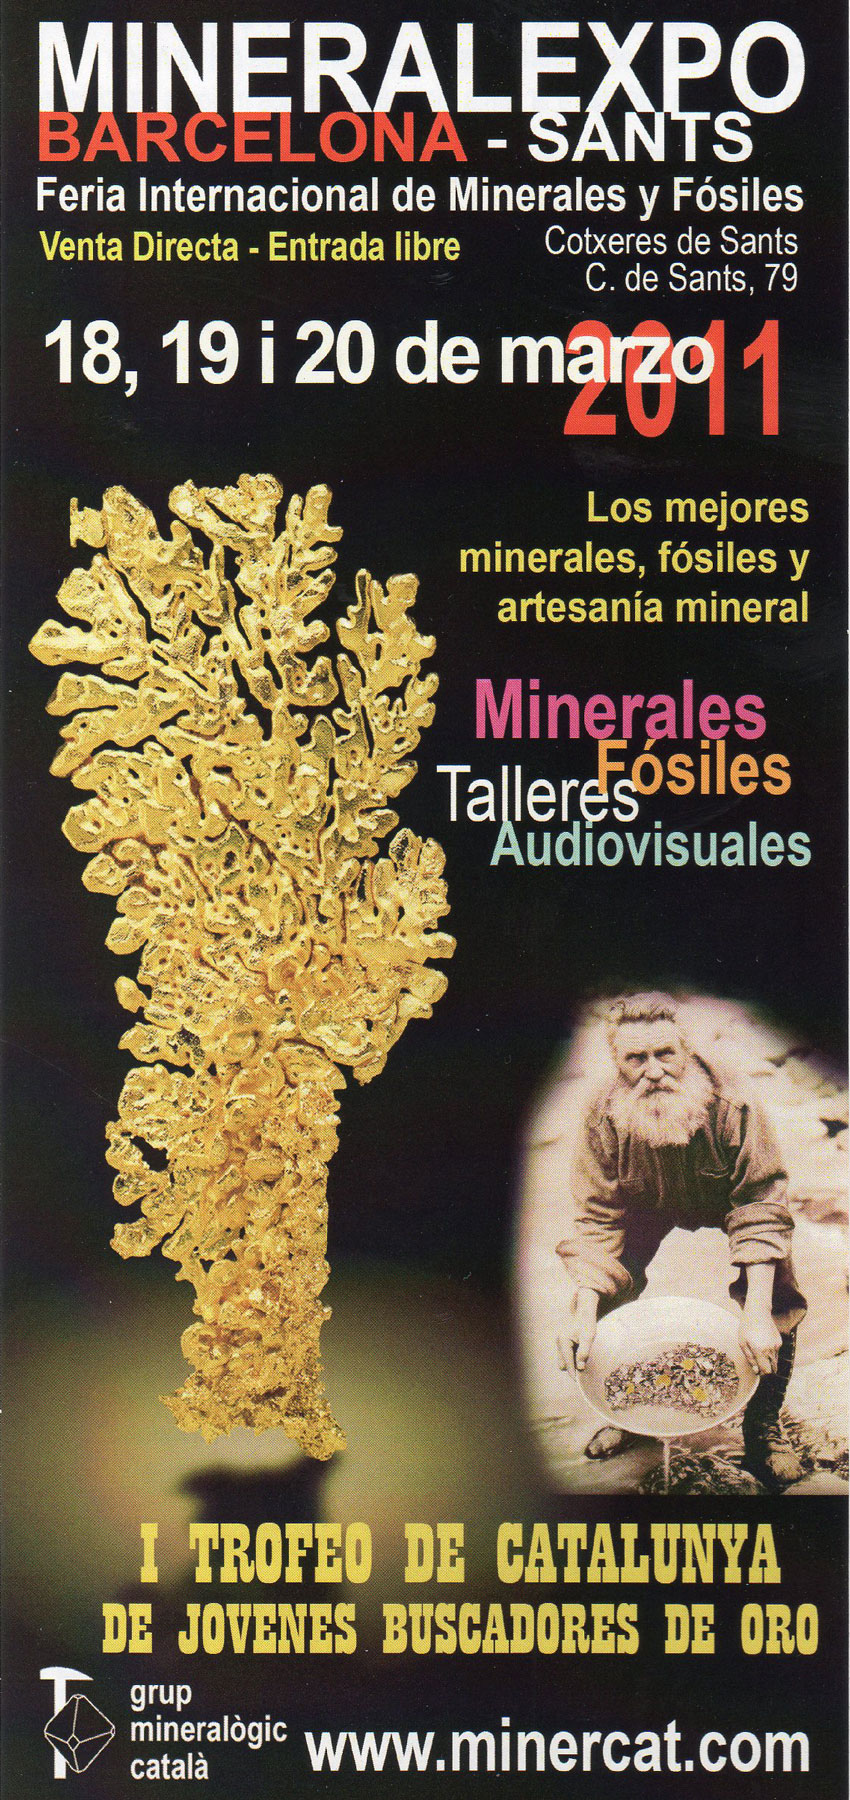 Mineralexpo Sants 2011